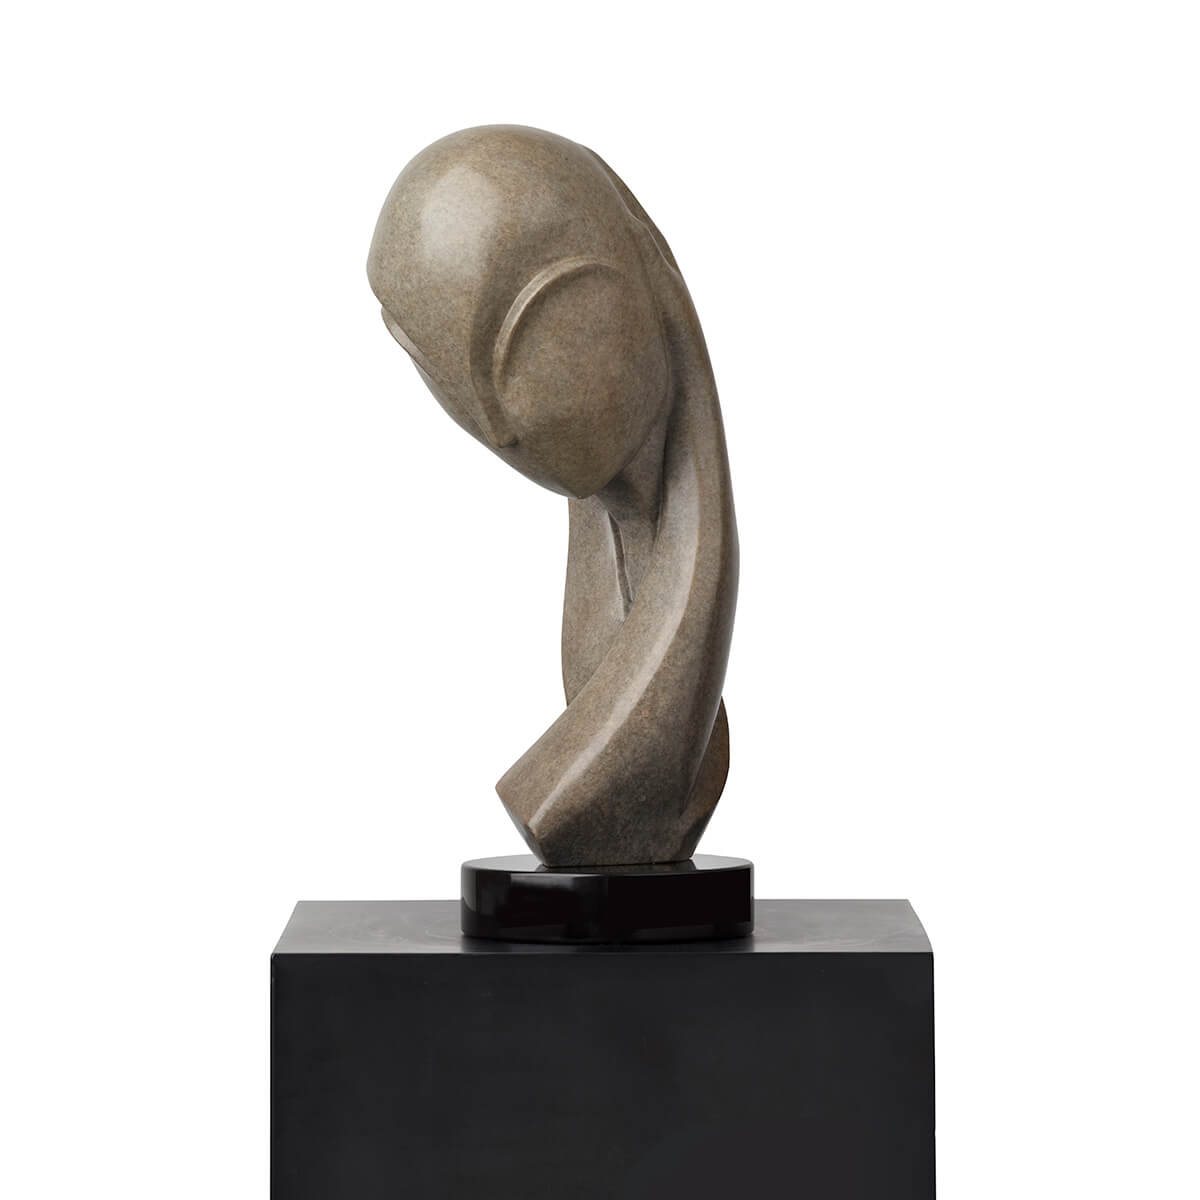 Robert-Helle-Sculpture-Gallery-Knowing-2-1200x1200